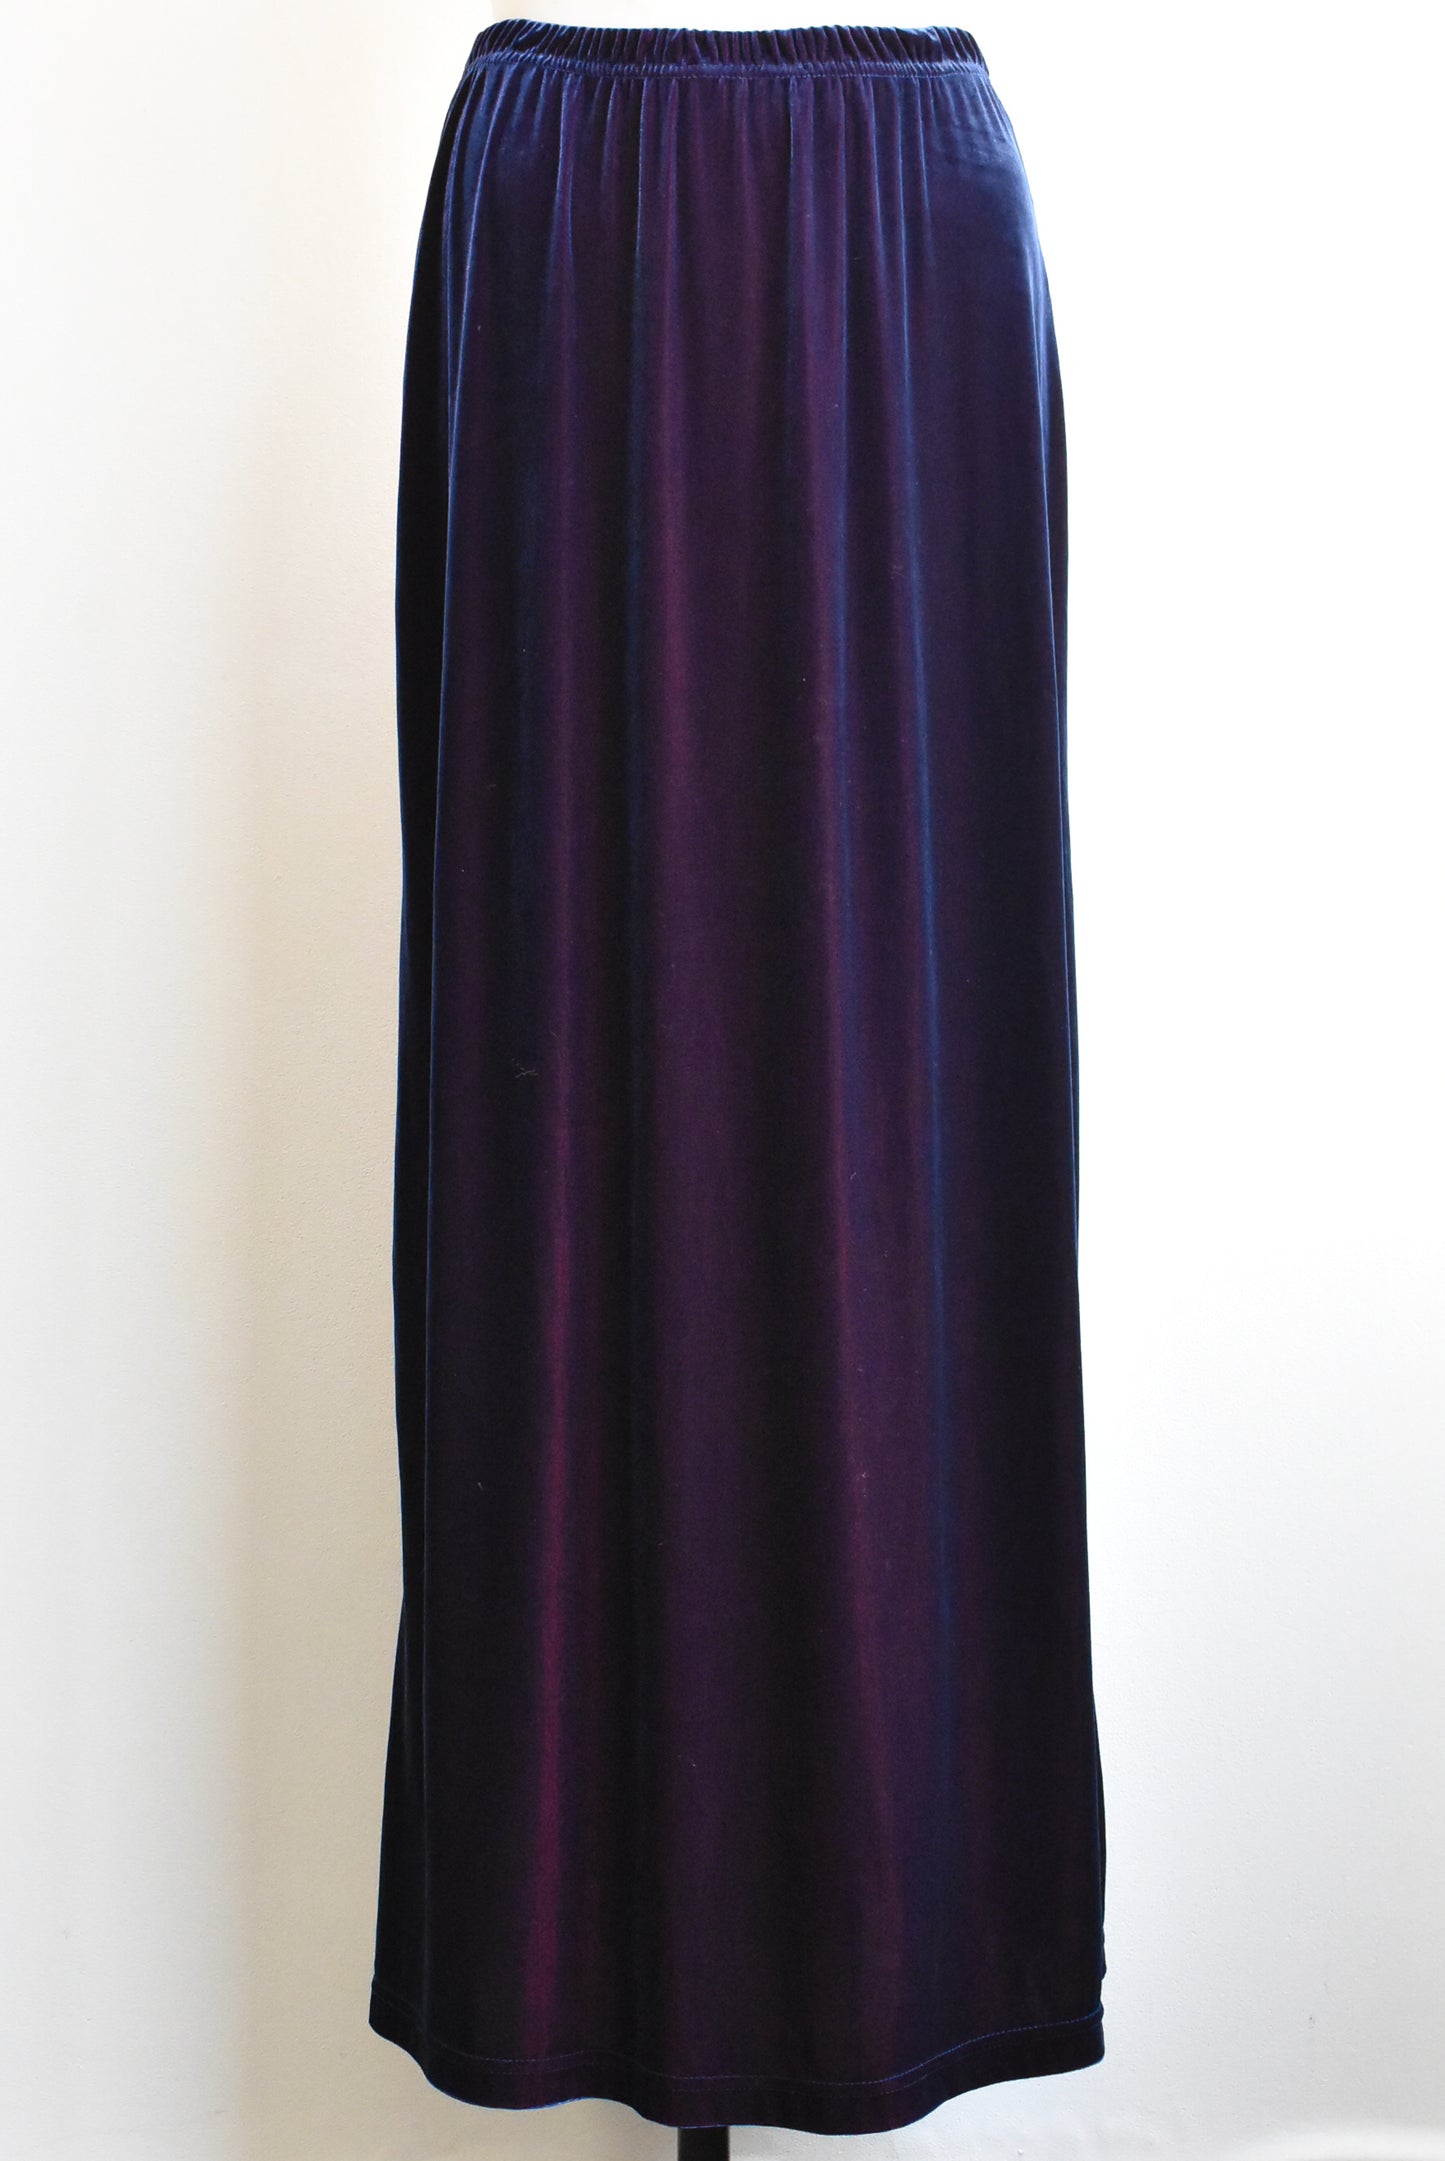 Hot Couture iridescent midnight blue velour skirt, size 14